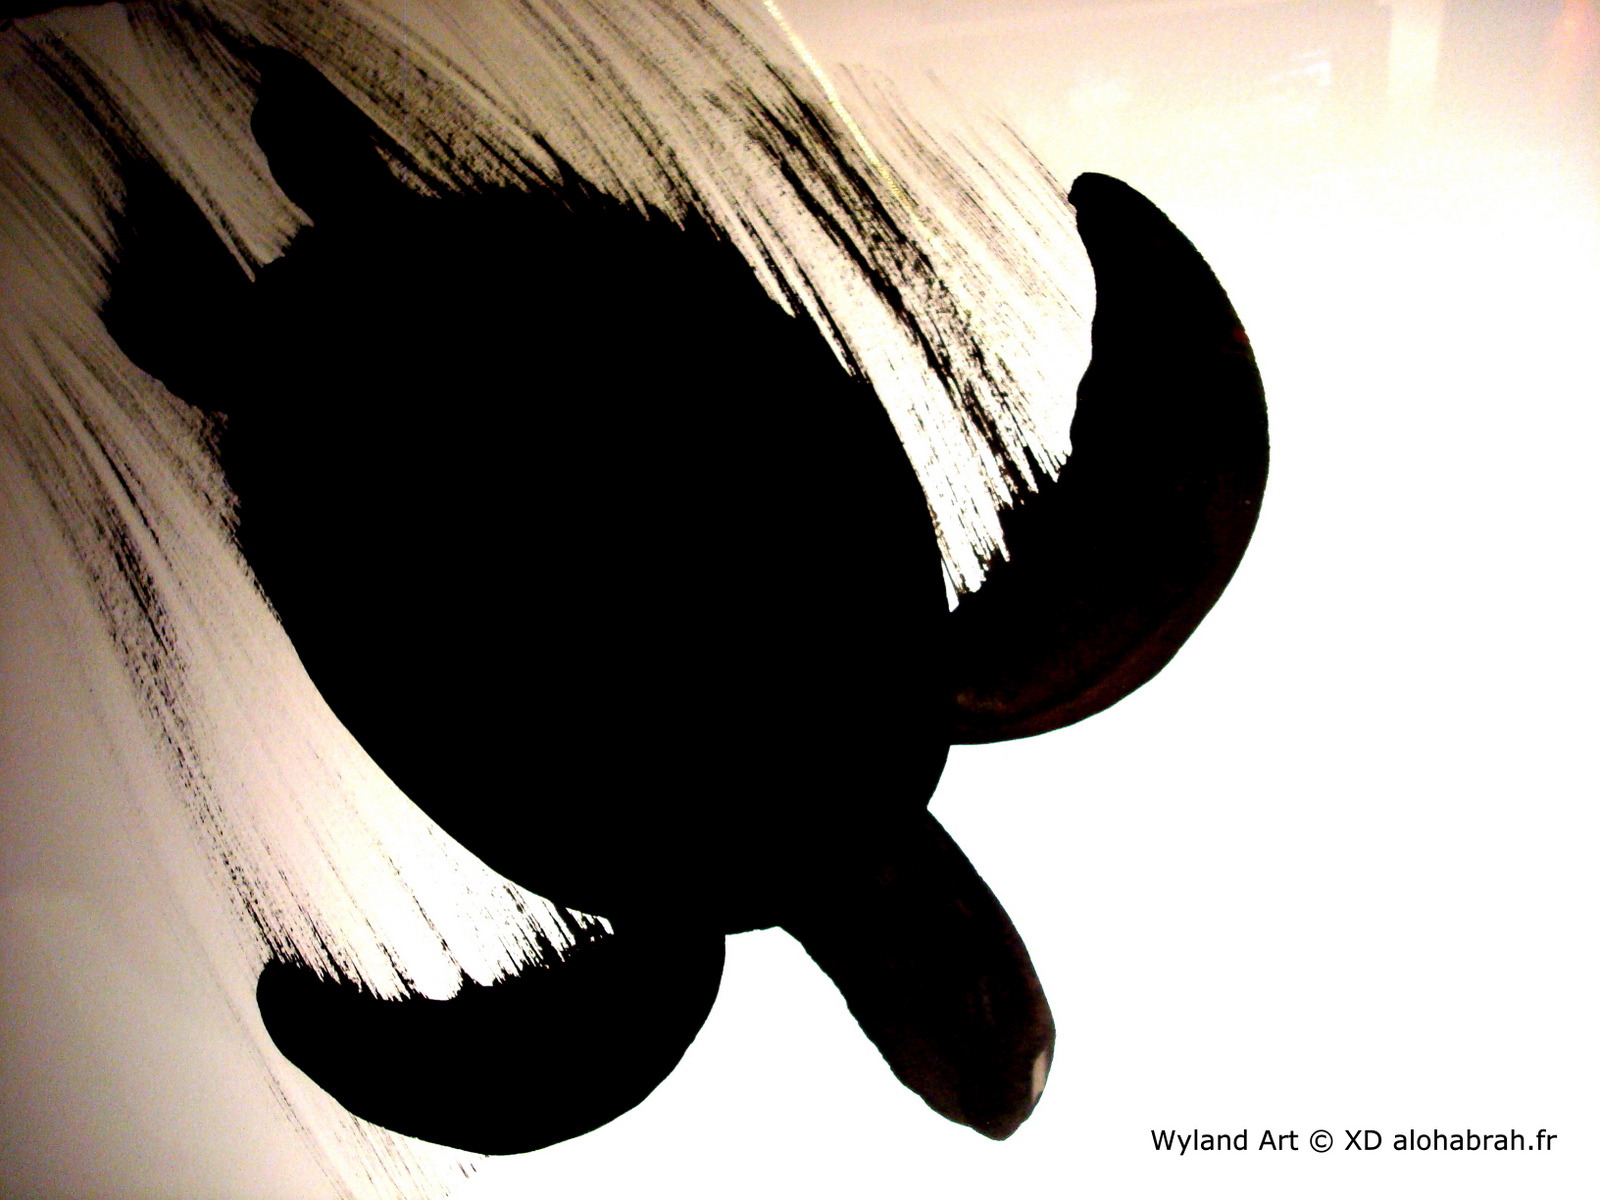 Black Turtle in light - Wyland Art © XD alohabrah.fr